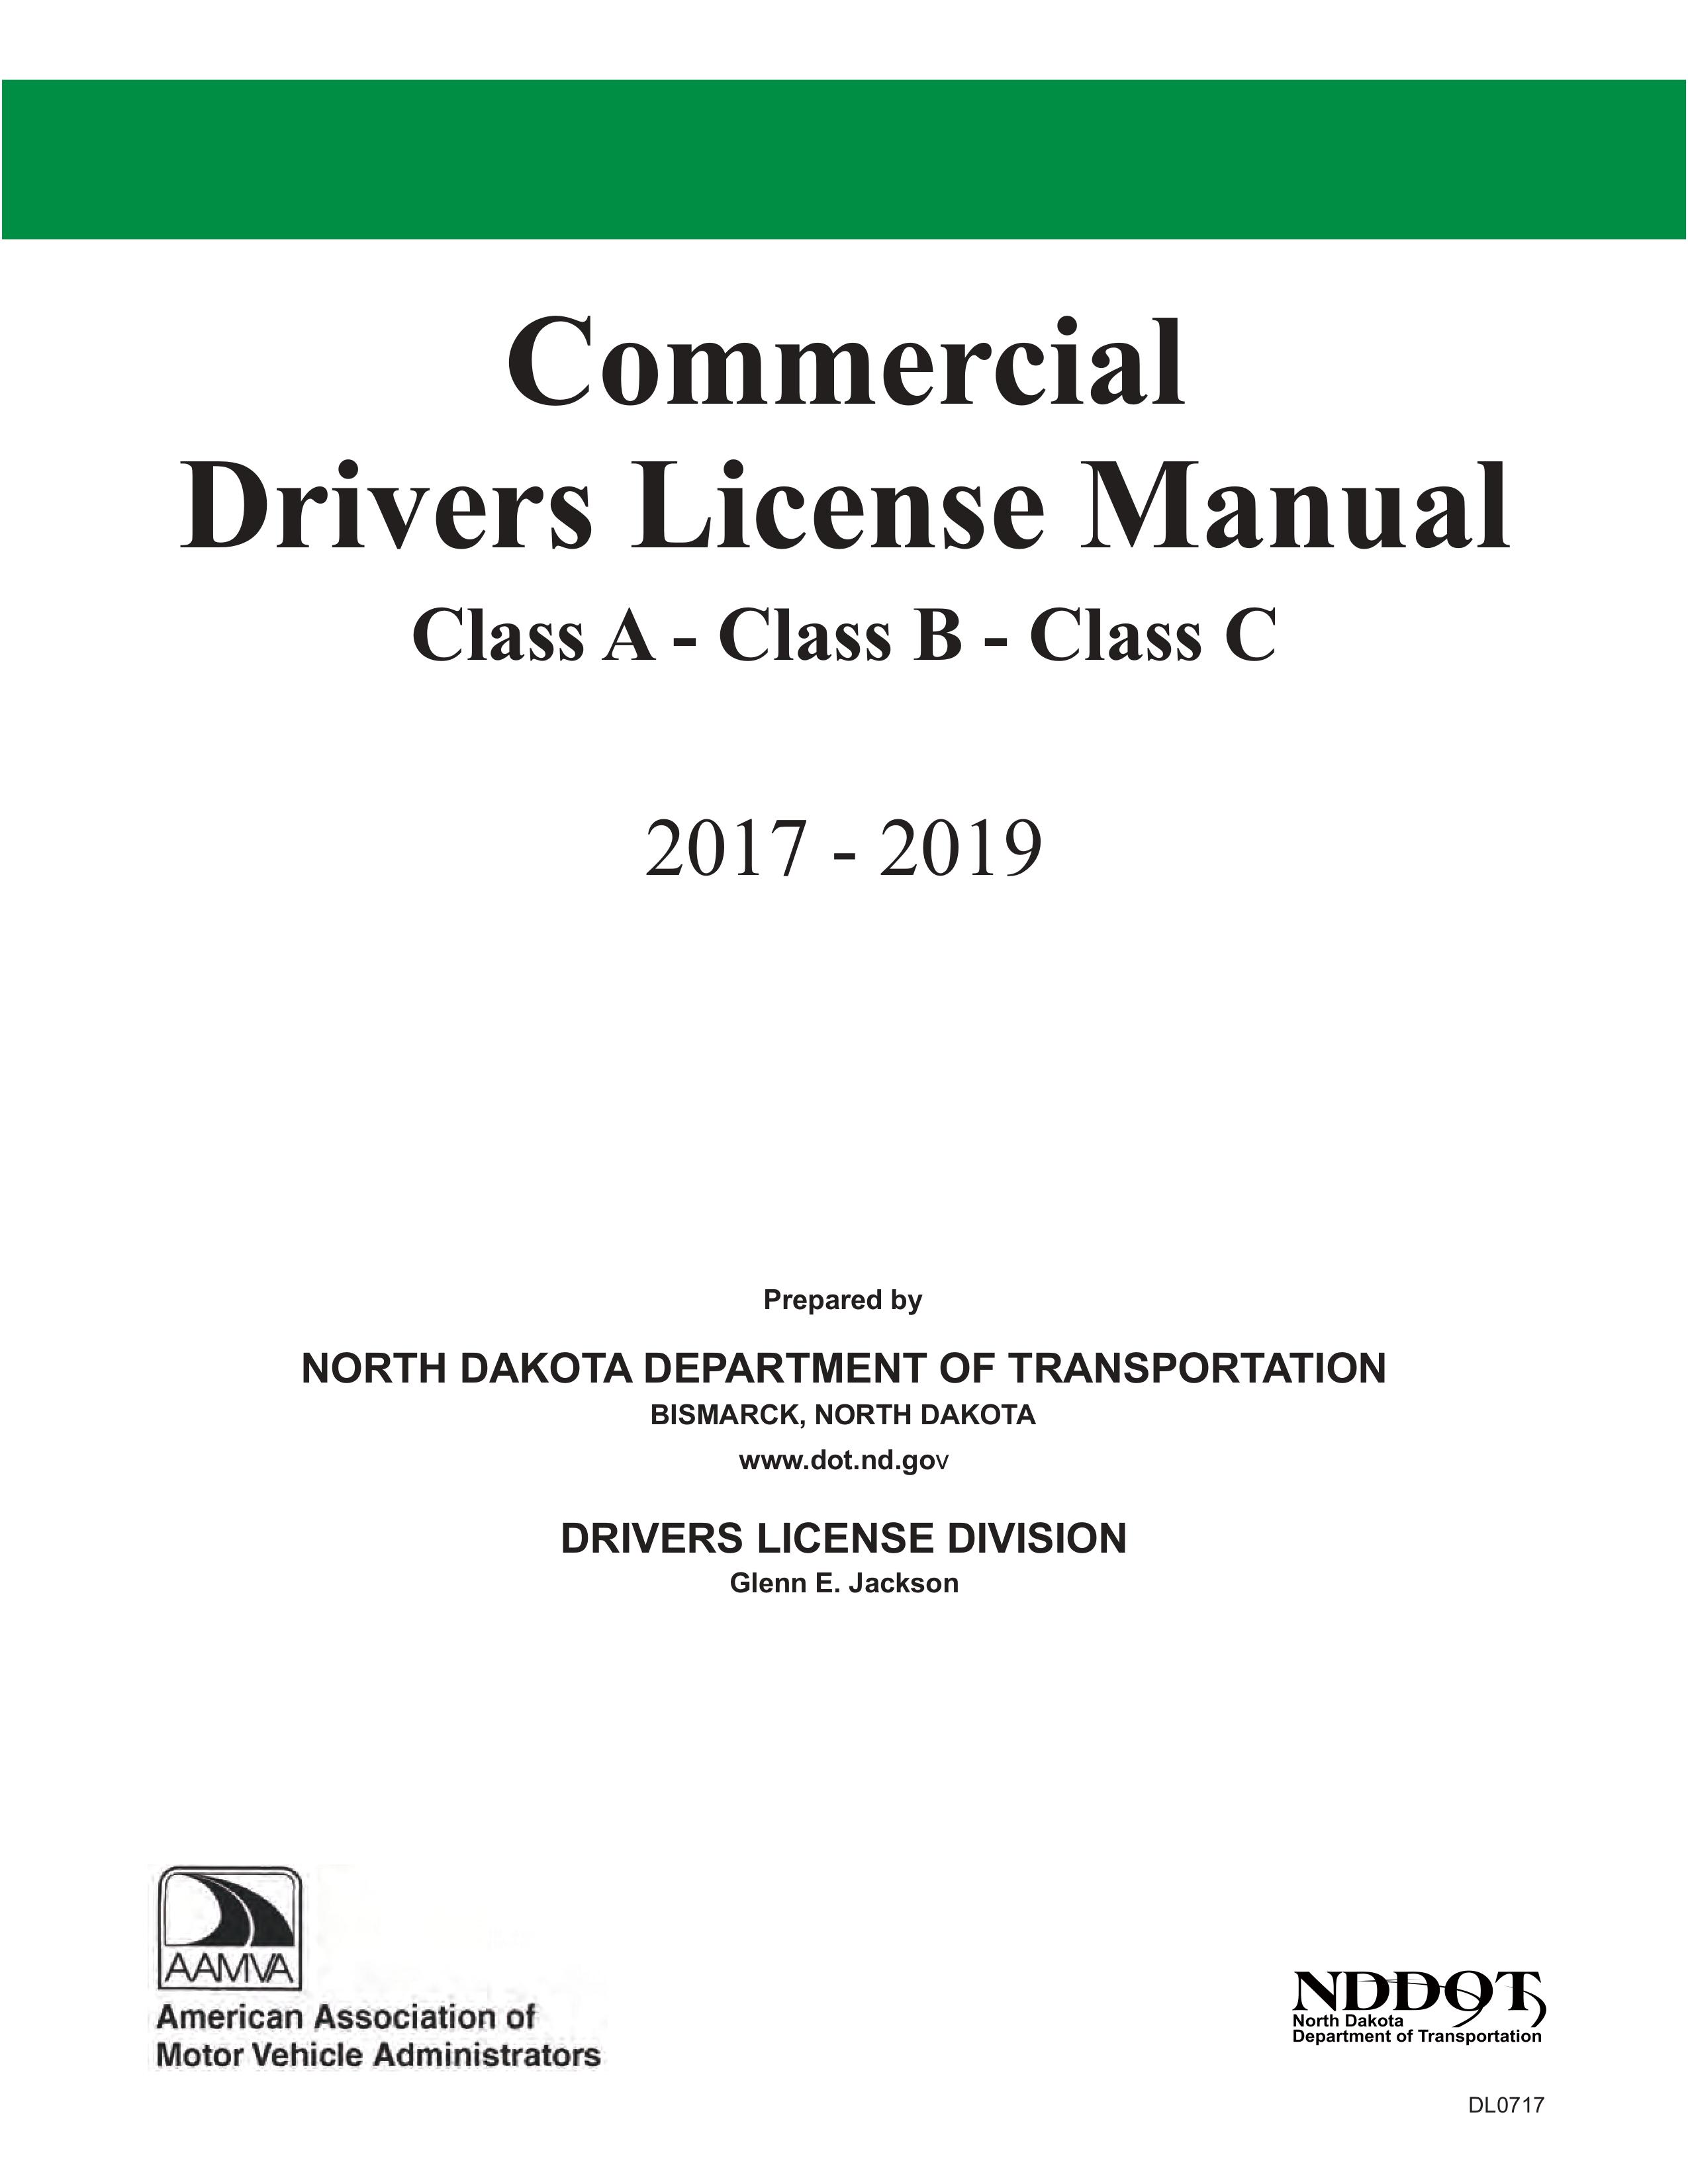 North Dakota's CDL Manual